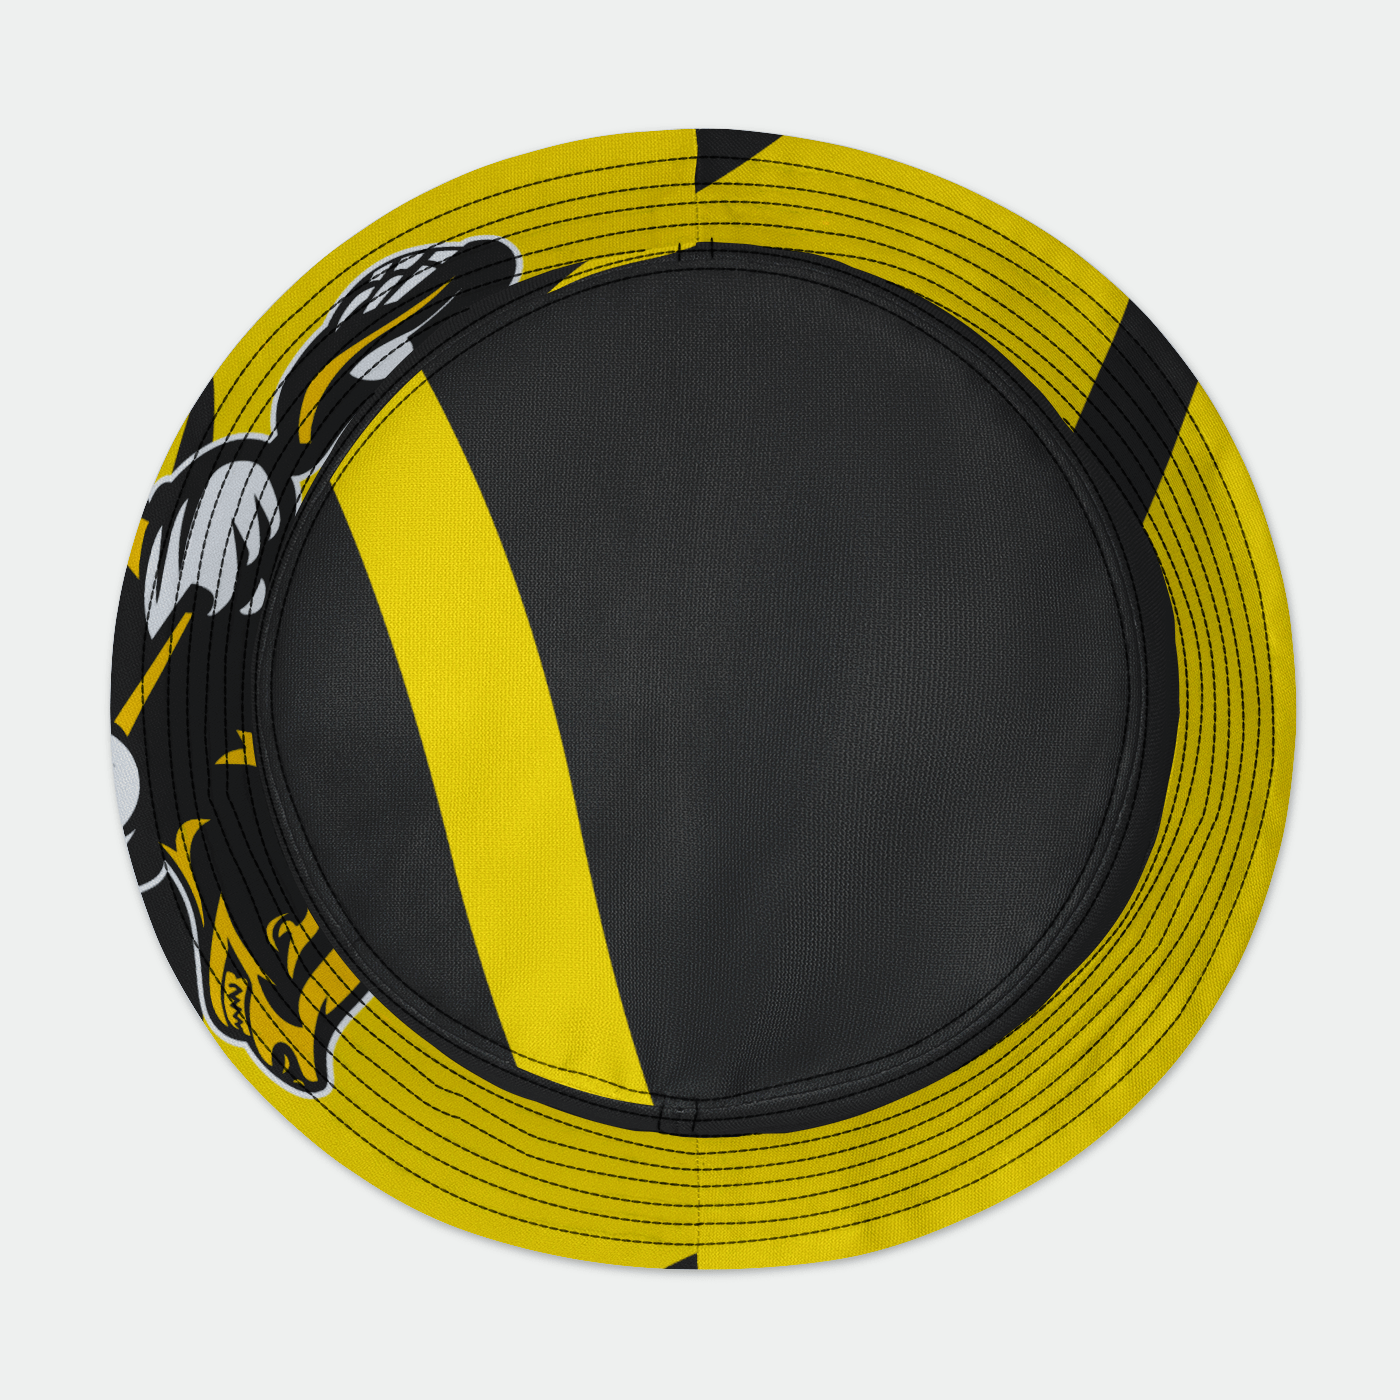 Honey Badgers LC Bucket Hat Signature Lacrosse